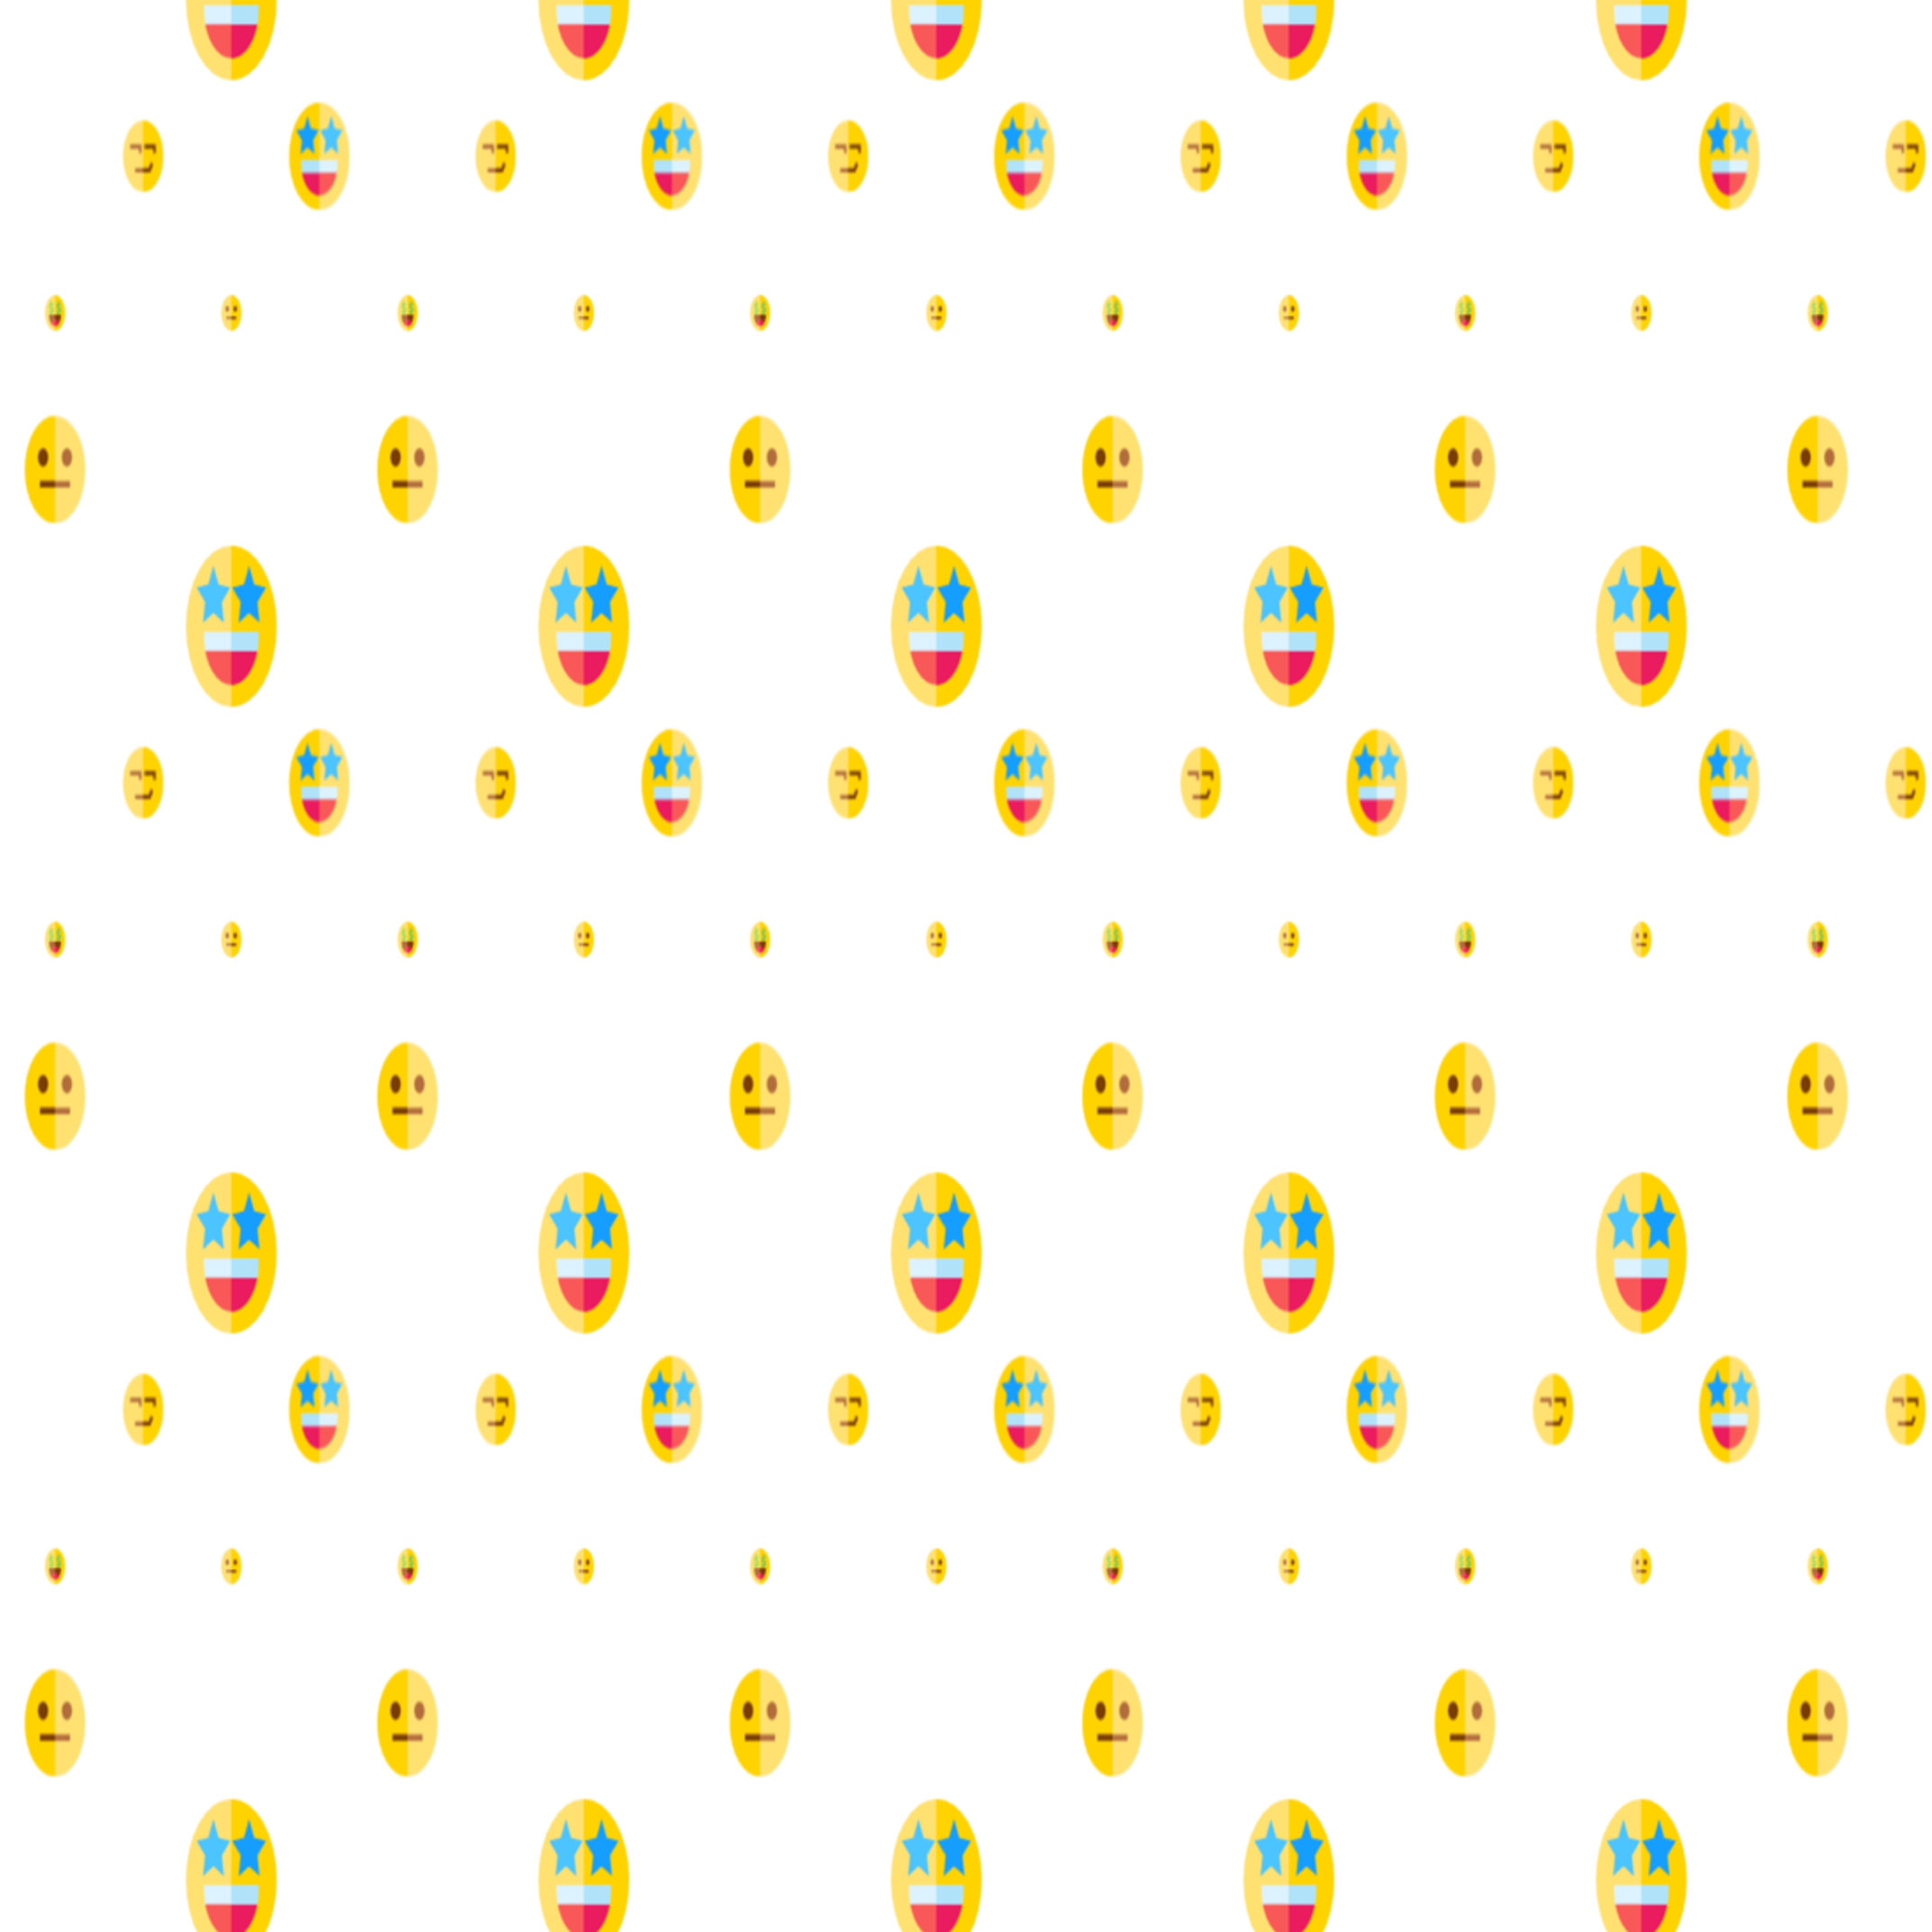 "Express Yourself: A Playful 10 Emoji Pattern Design" cover image.